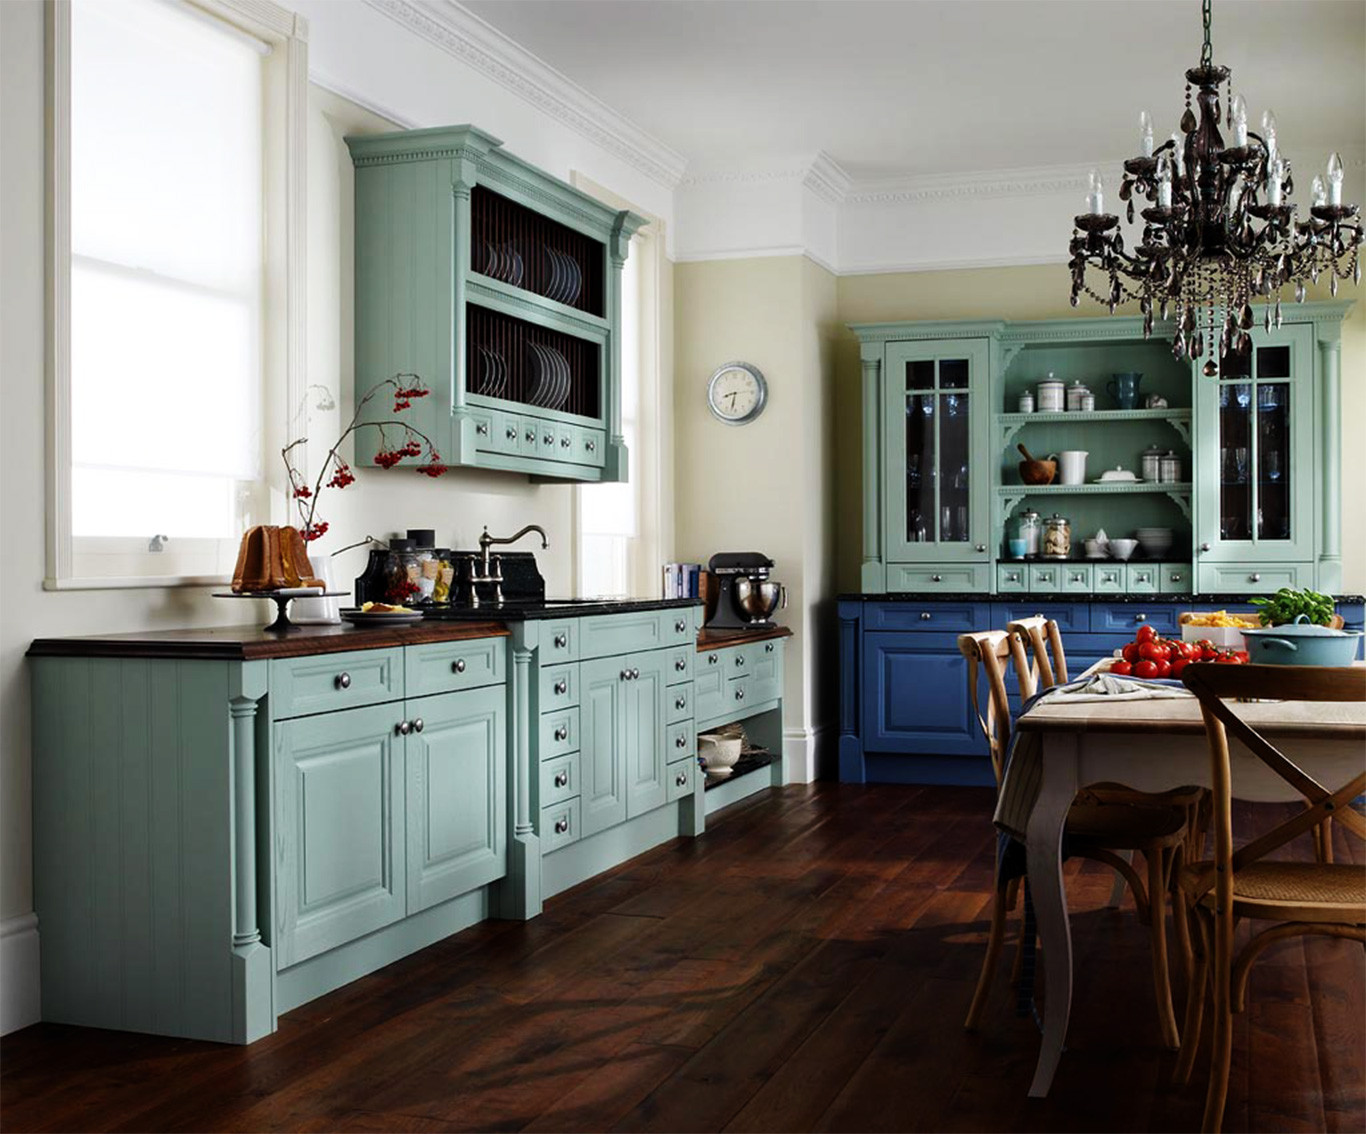 Colored Kitchen Cabinets
 Explore Possible Kitchen Cabinet Paint Colors Interior